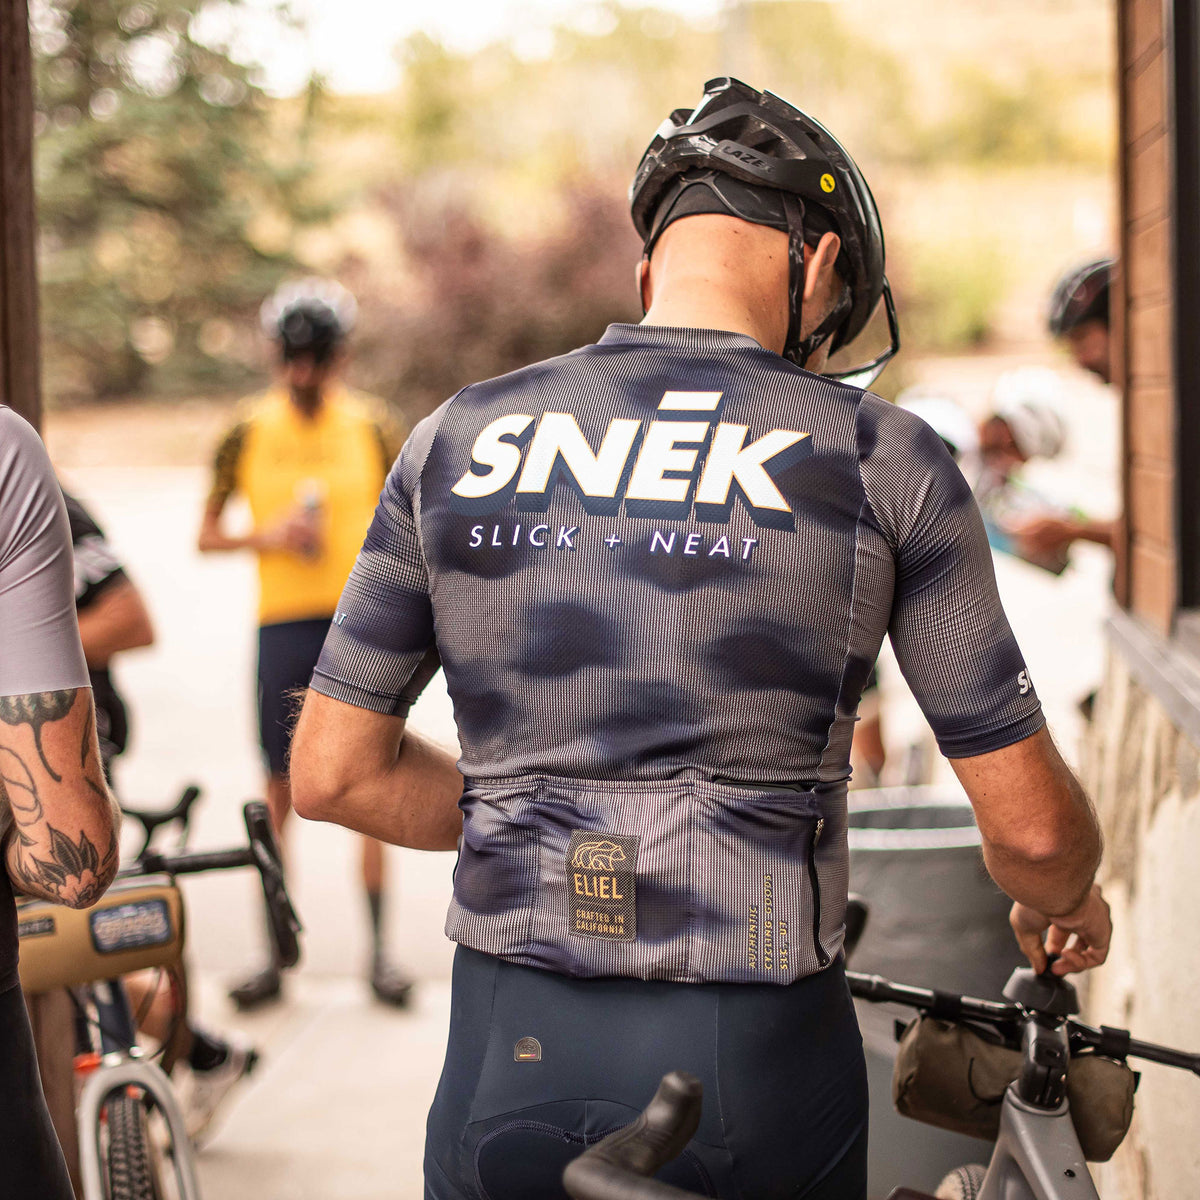 Slick + Neat Cycling Jersey - Men's